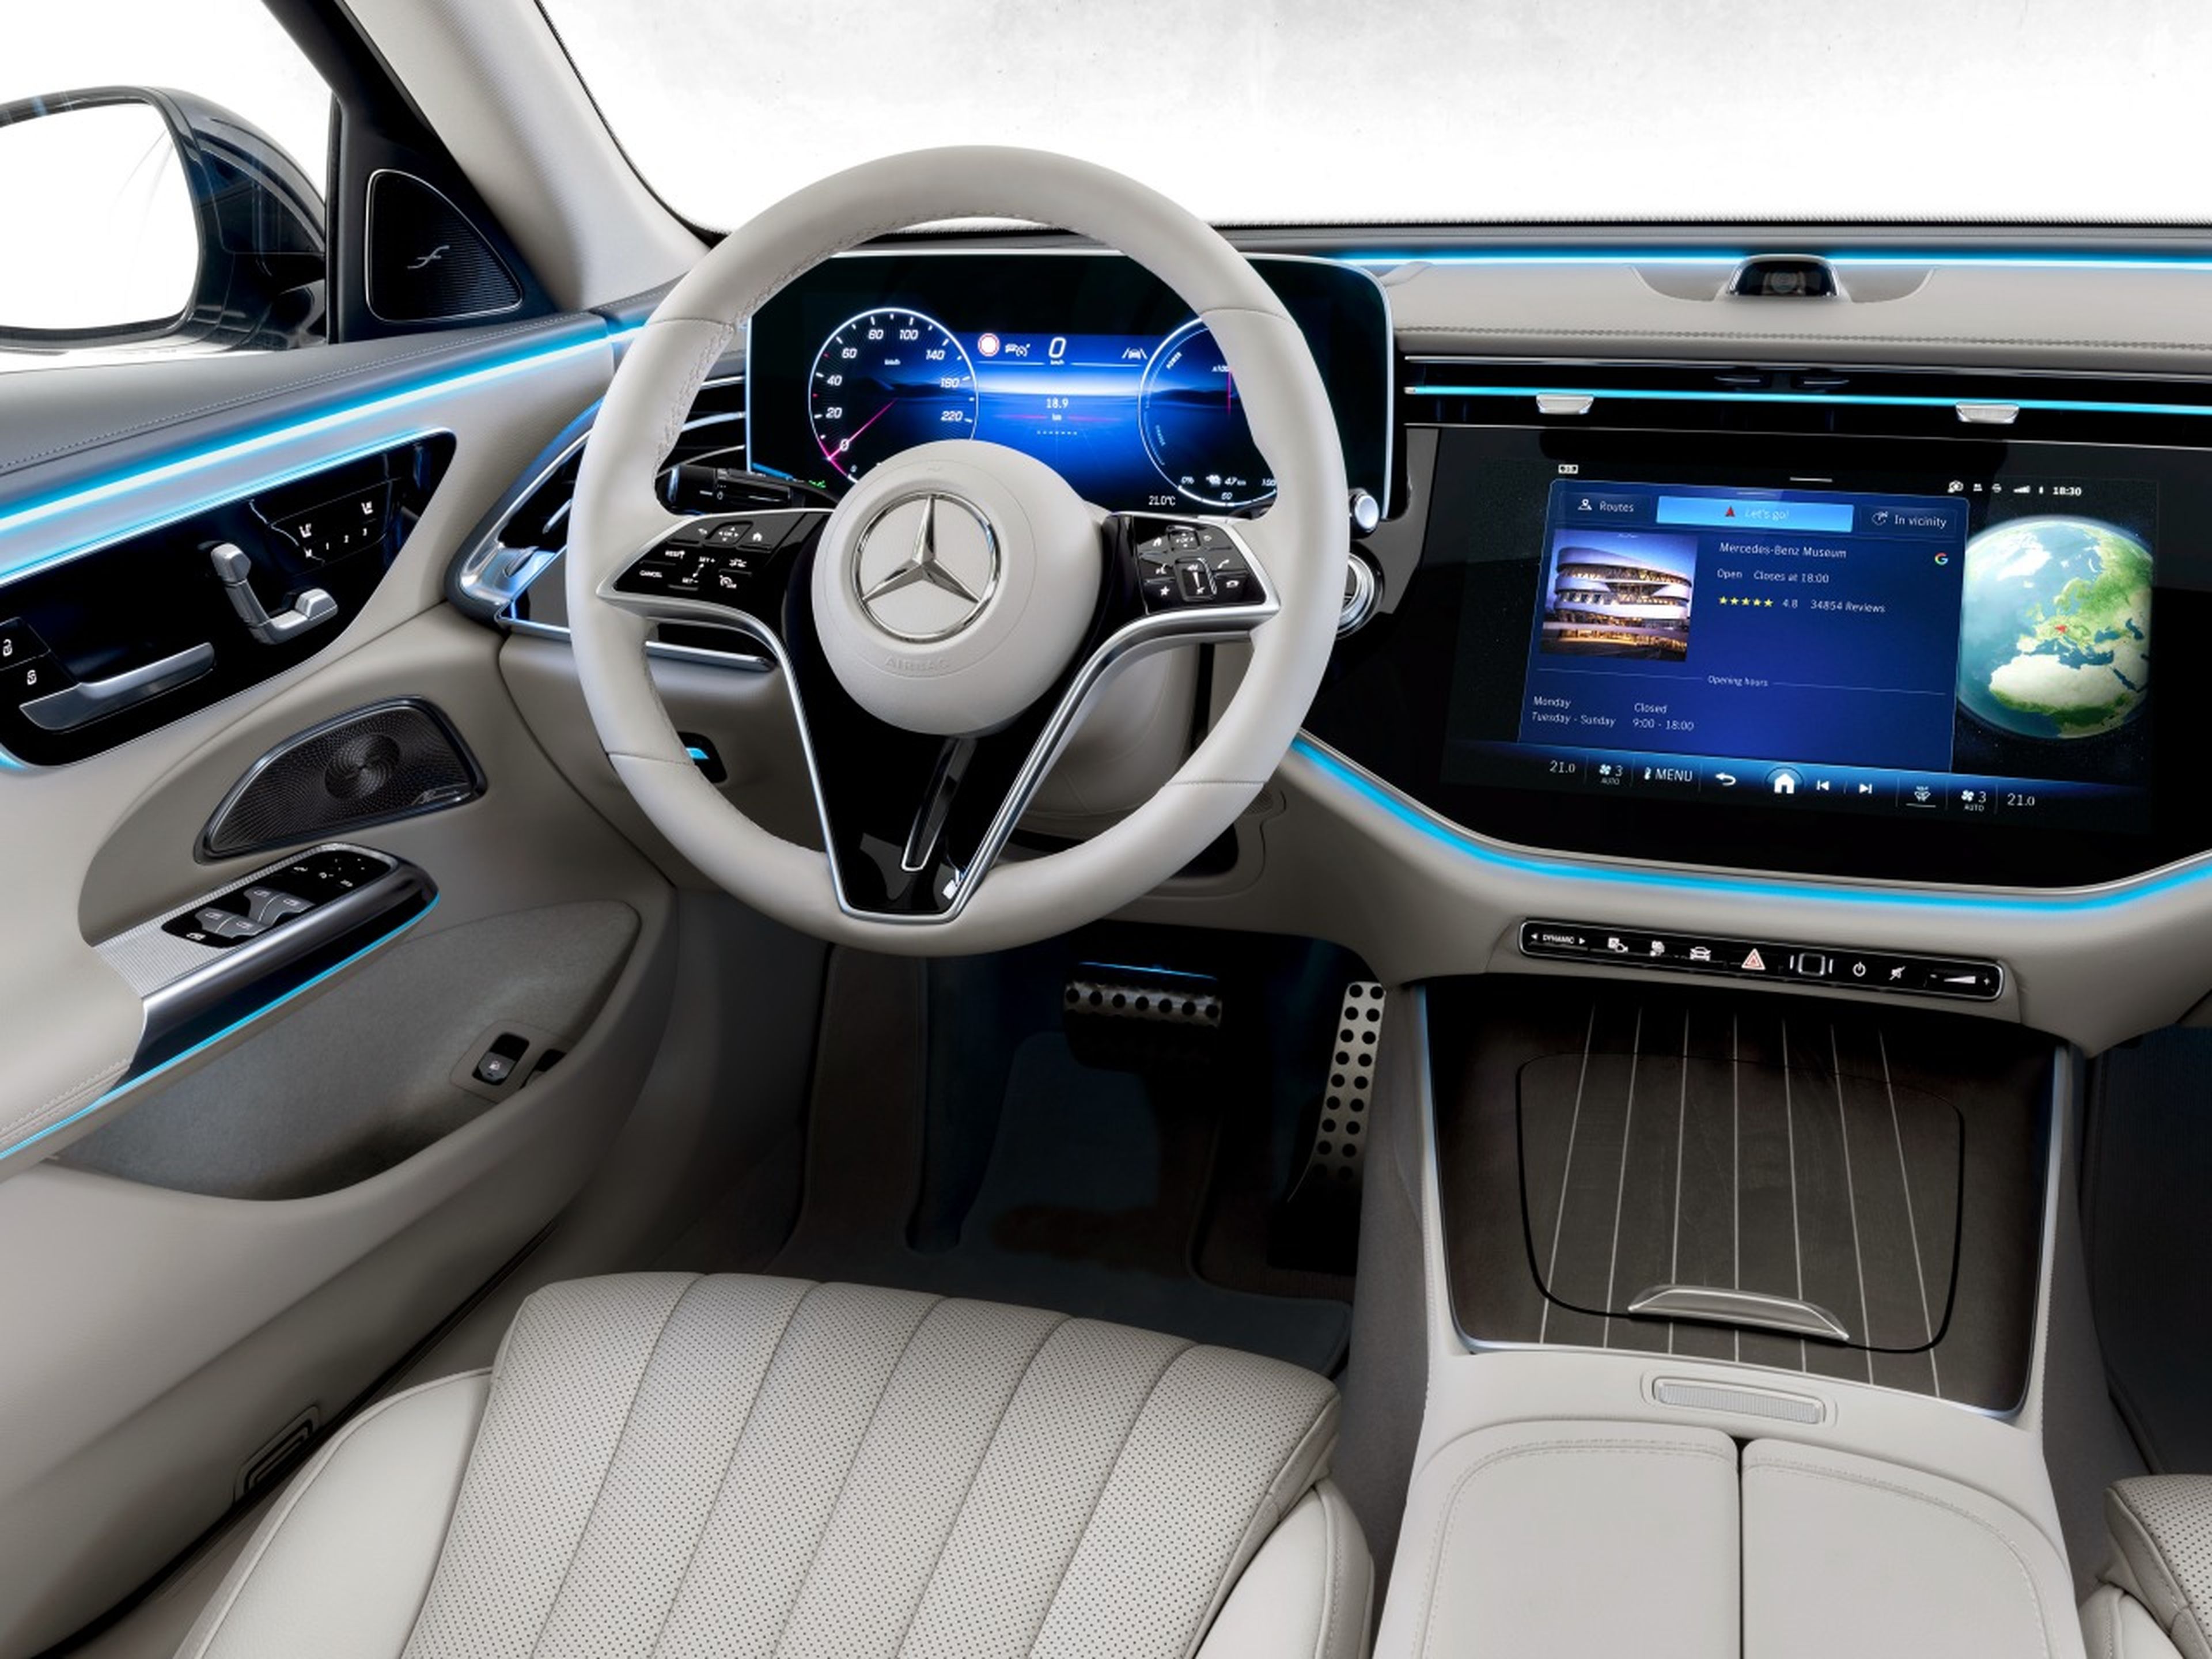 Mercedes Clase E interior